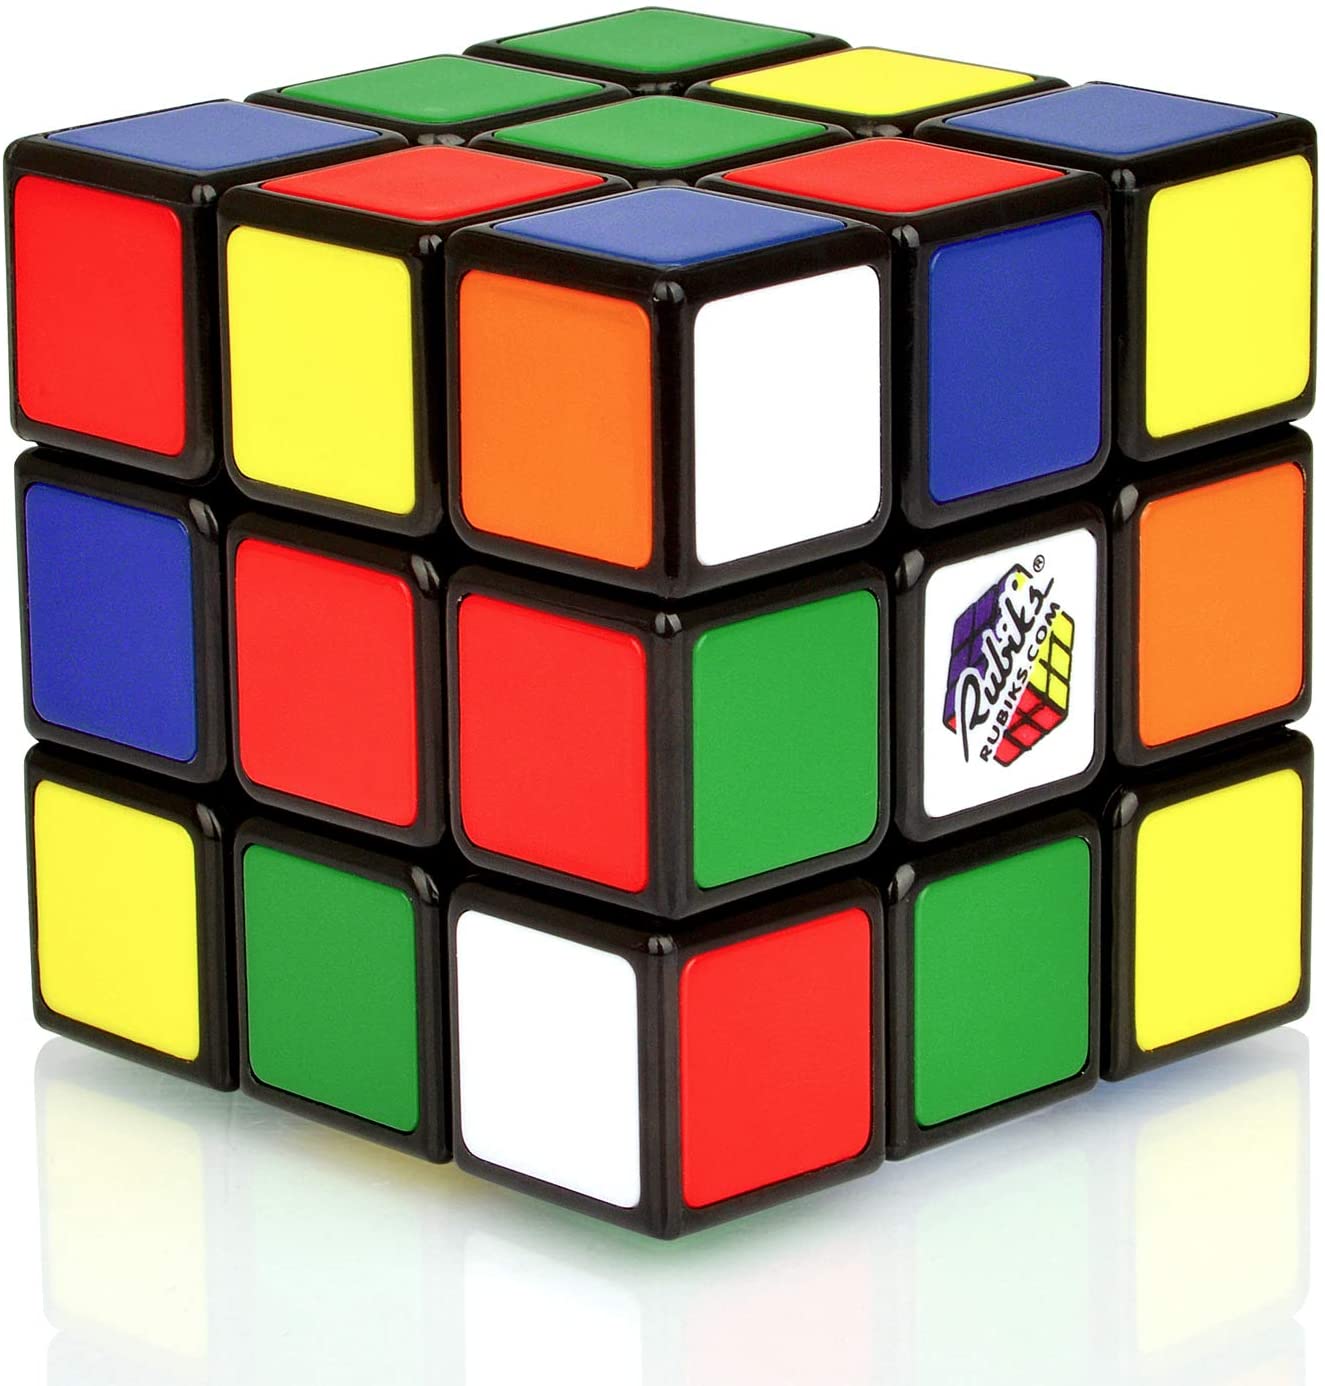 The Original Rubik's Cube